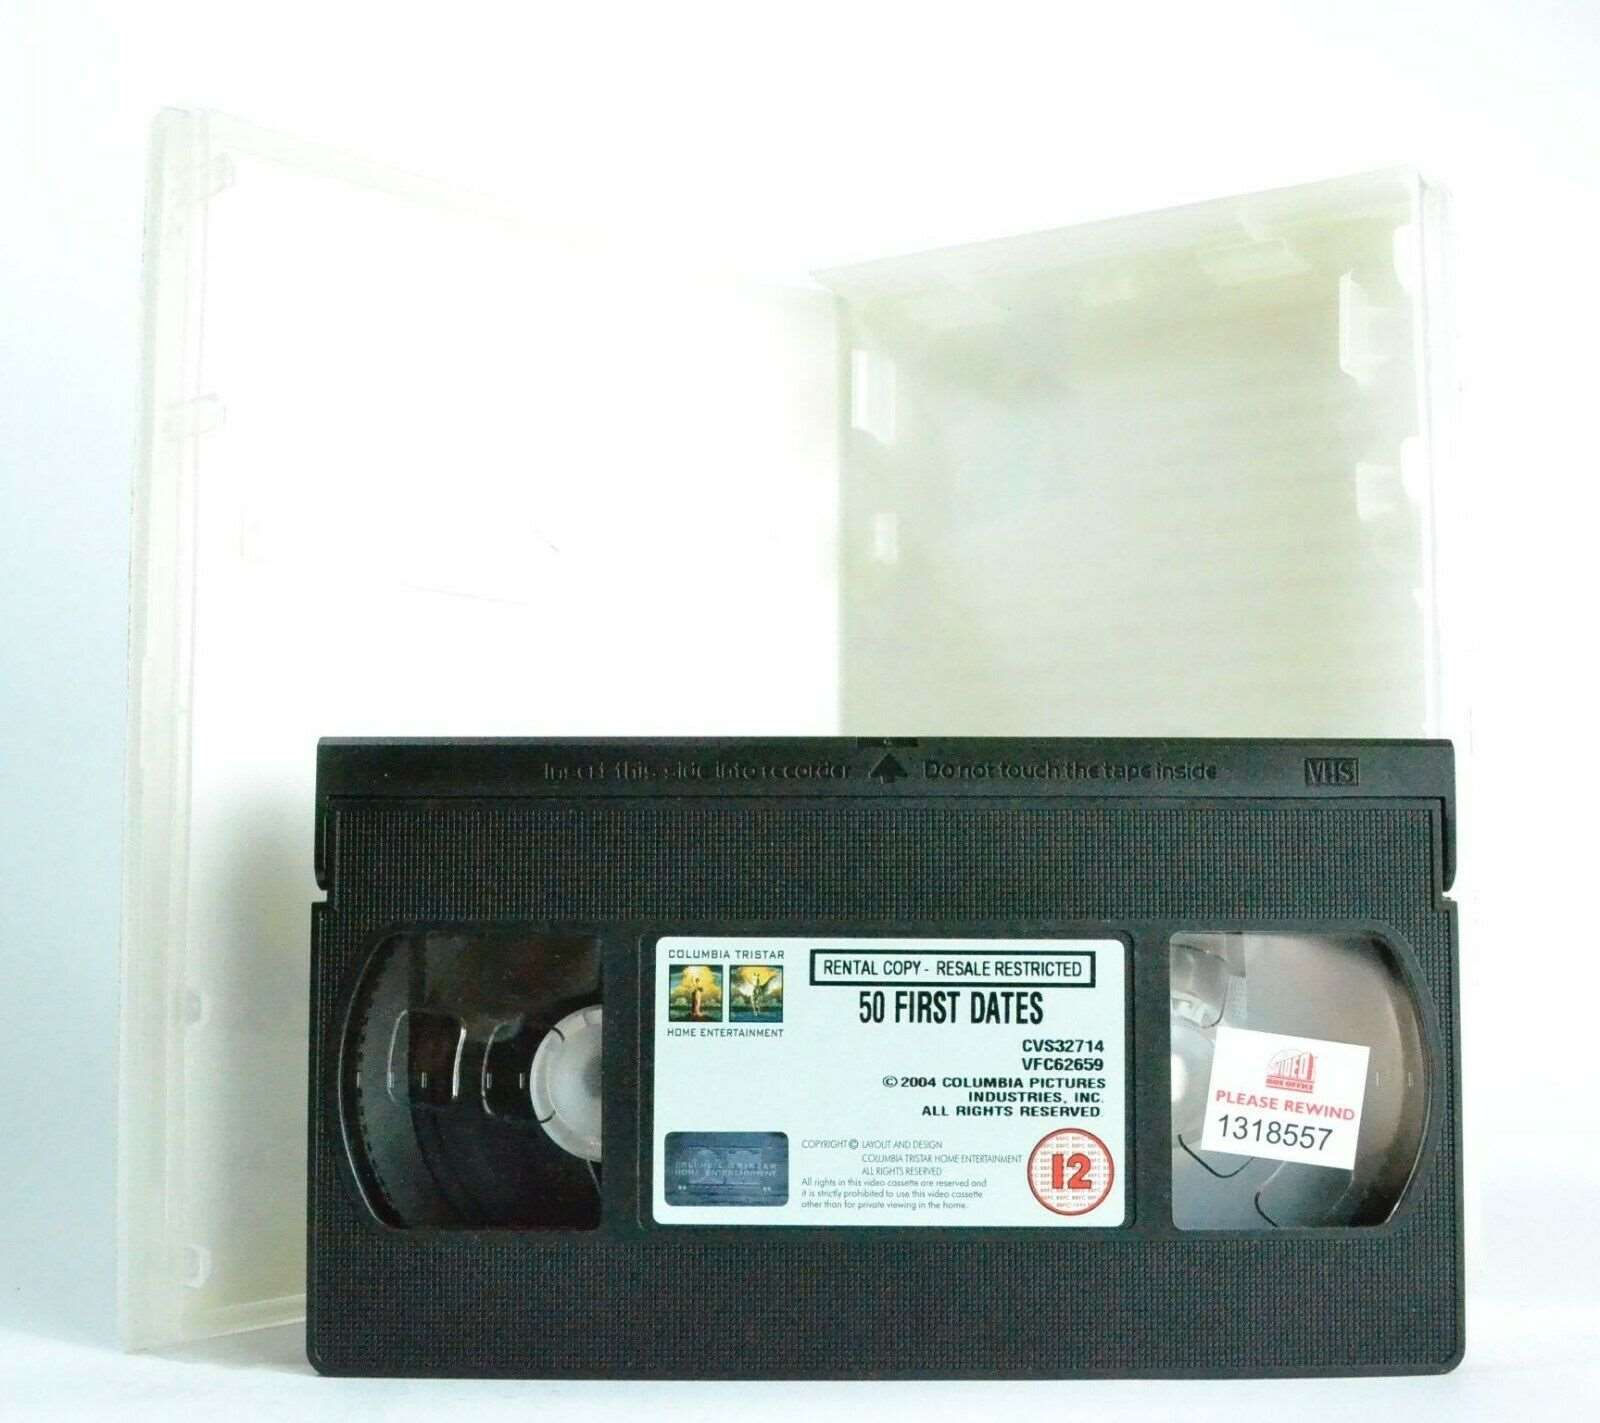 50 First Dates: A.Sandler/D.Barrymore - Romantic Comedy (2004) - Large Box - VHS - Golden Class Movies LTD